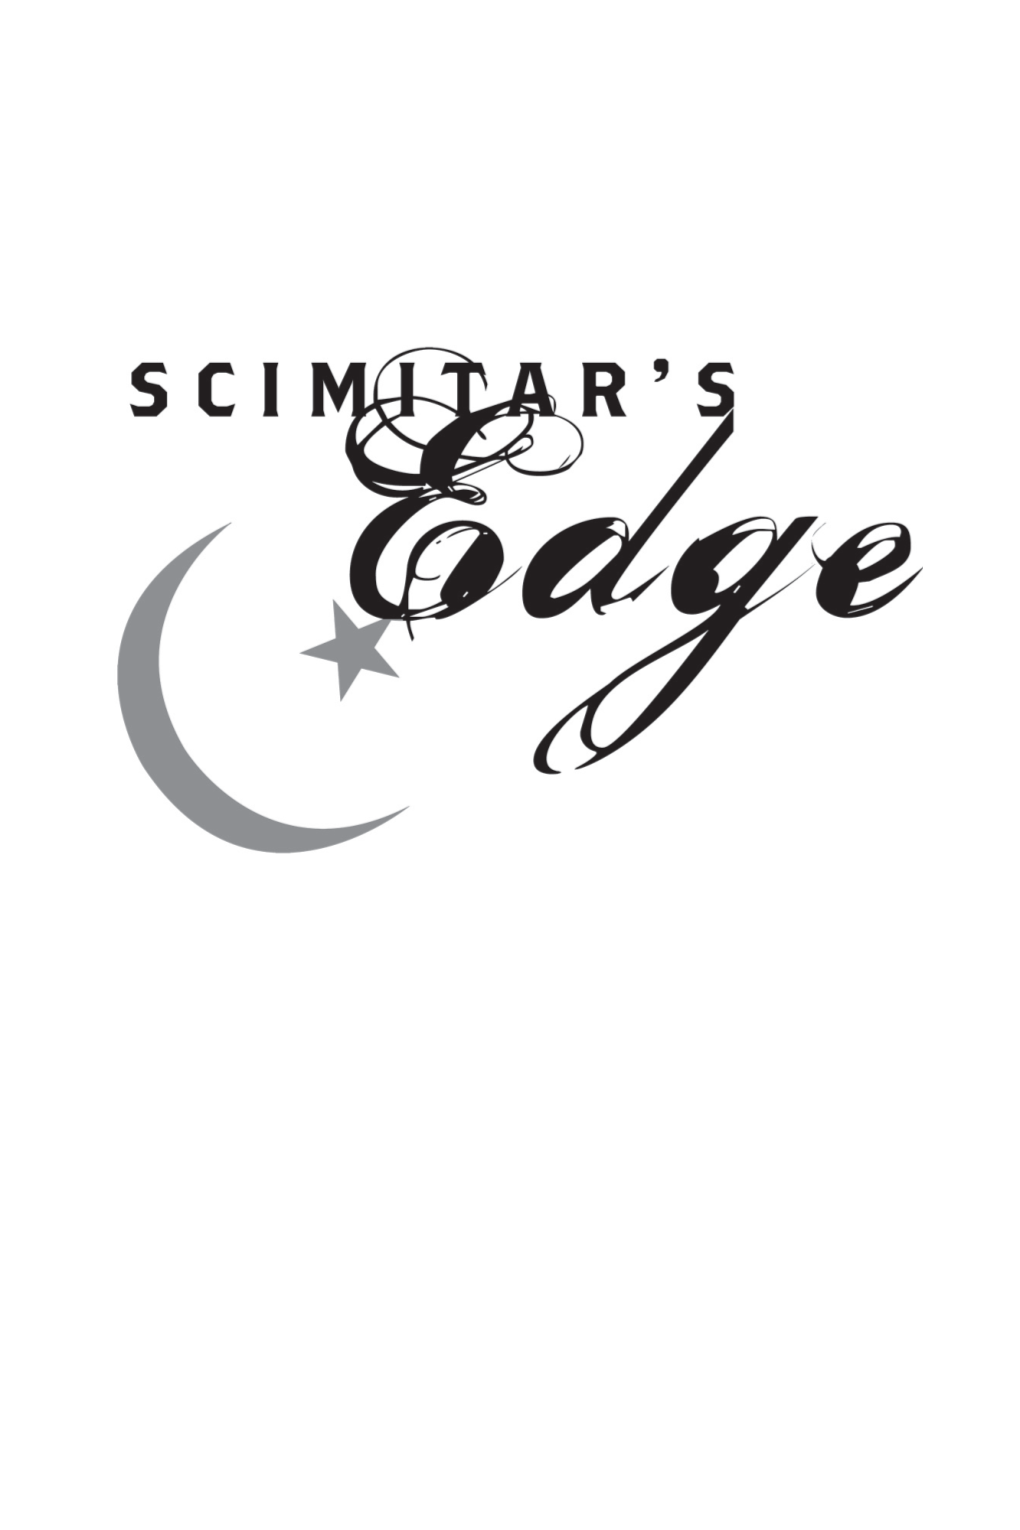 Scimitar's Edge